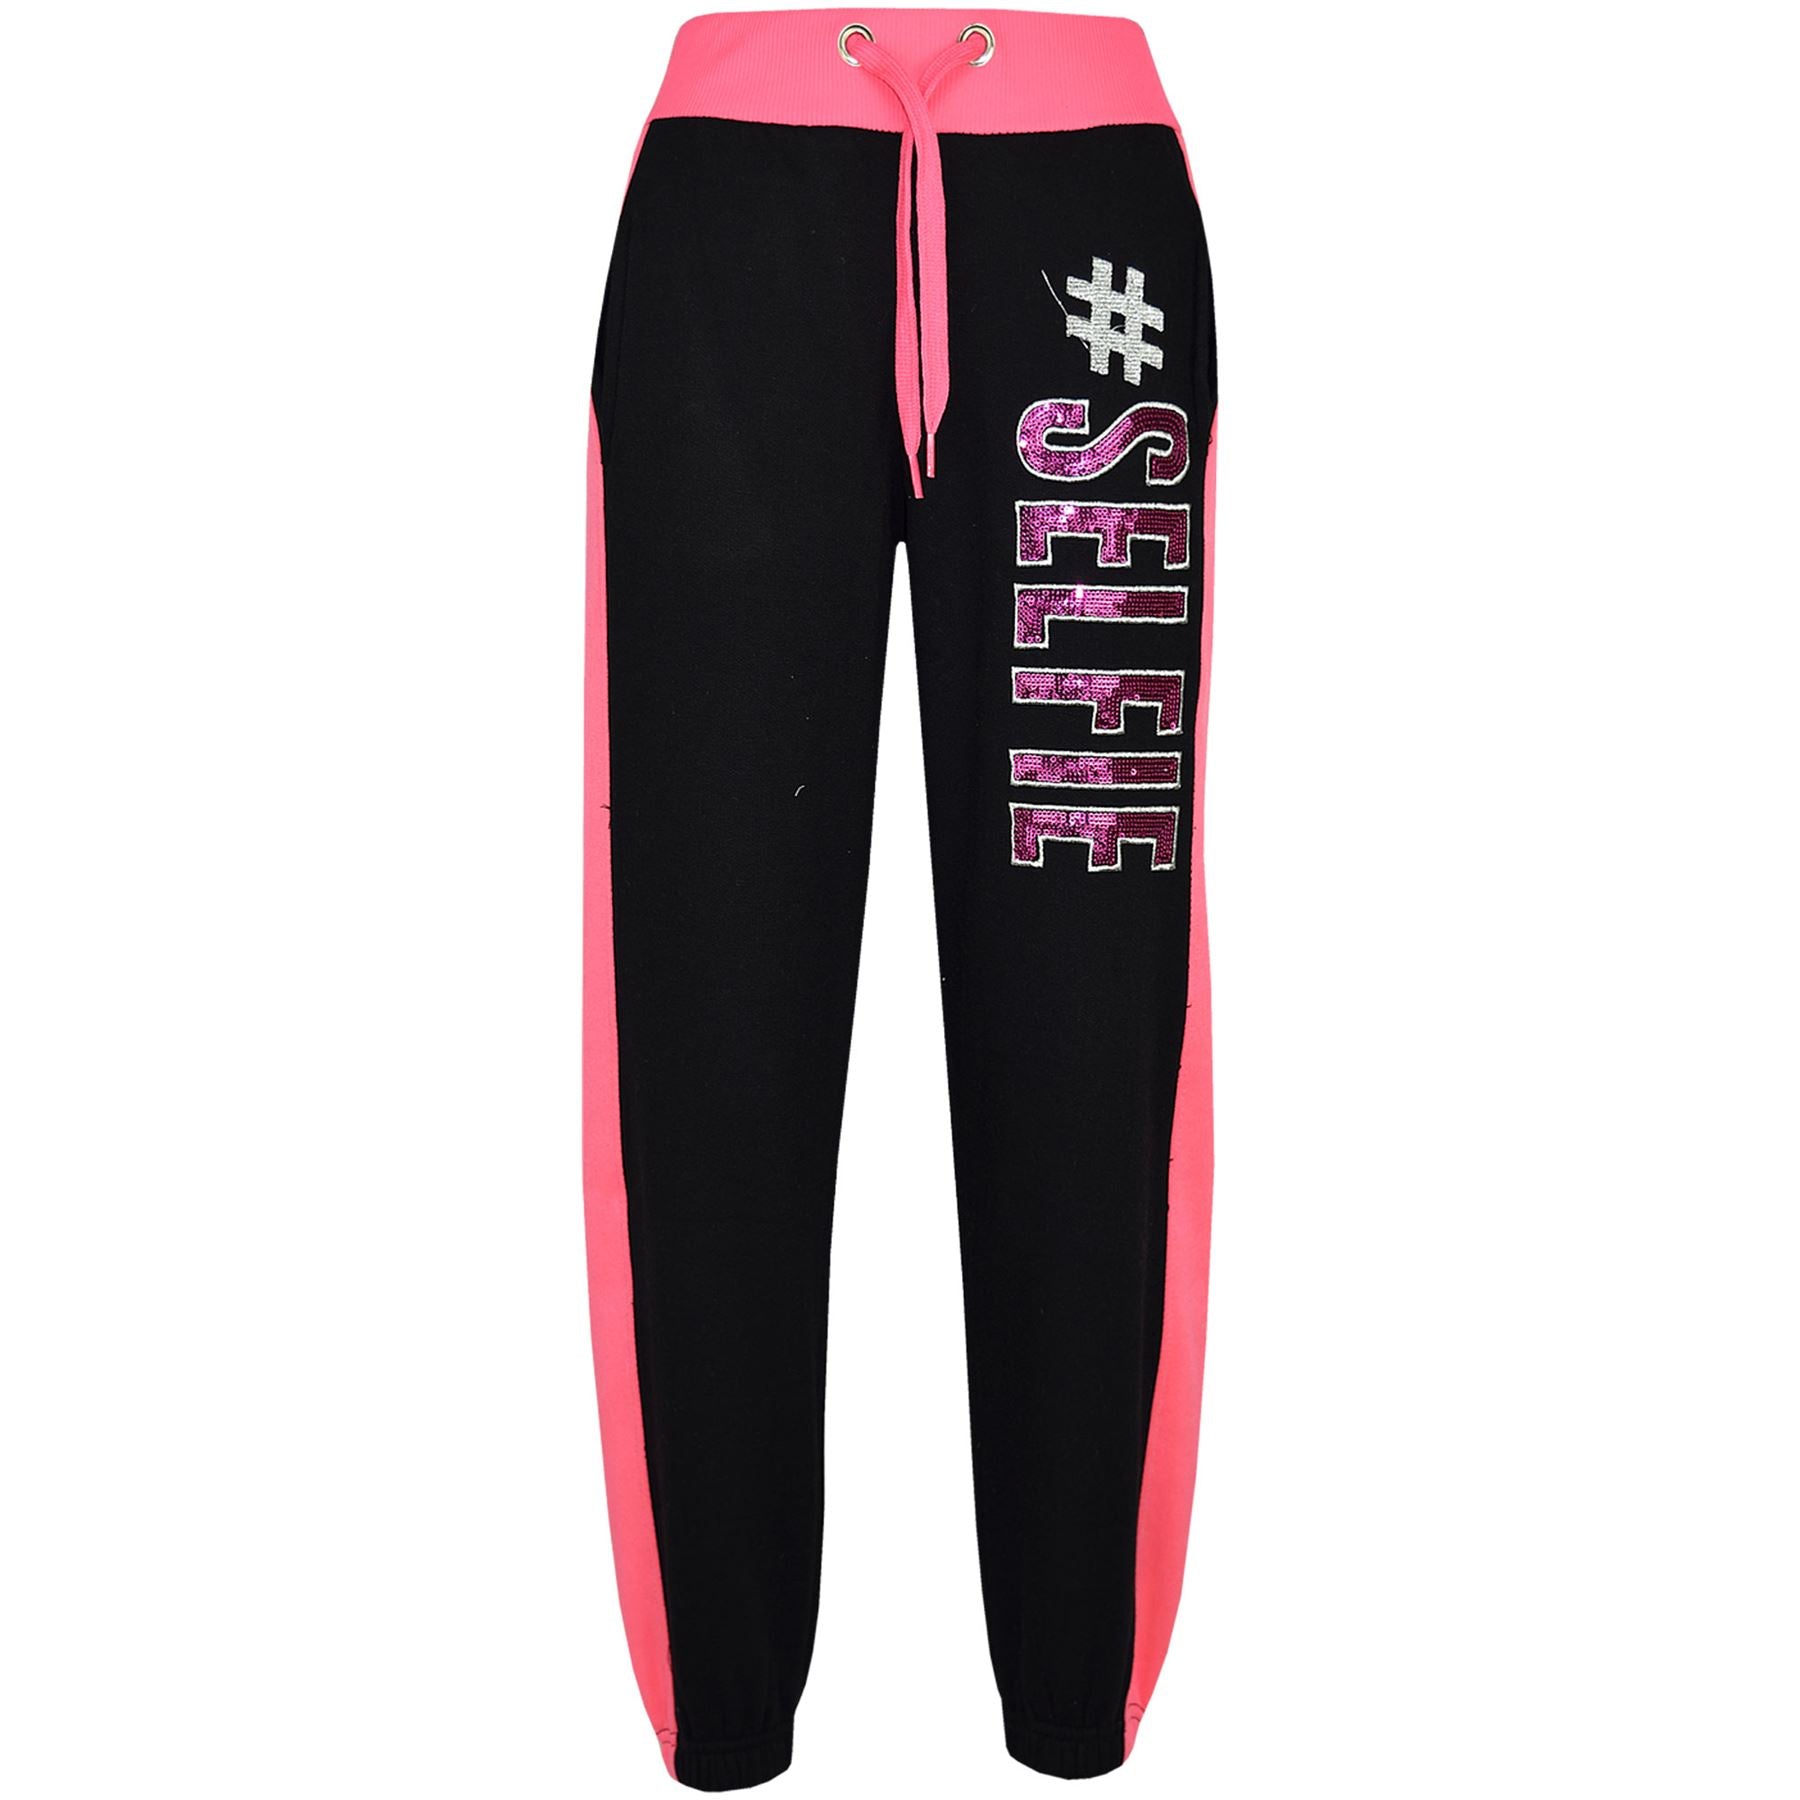 Girls #SELFIE Sequin Embroidered Black & N.Pink Tracksuit